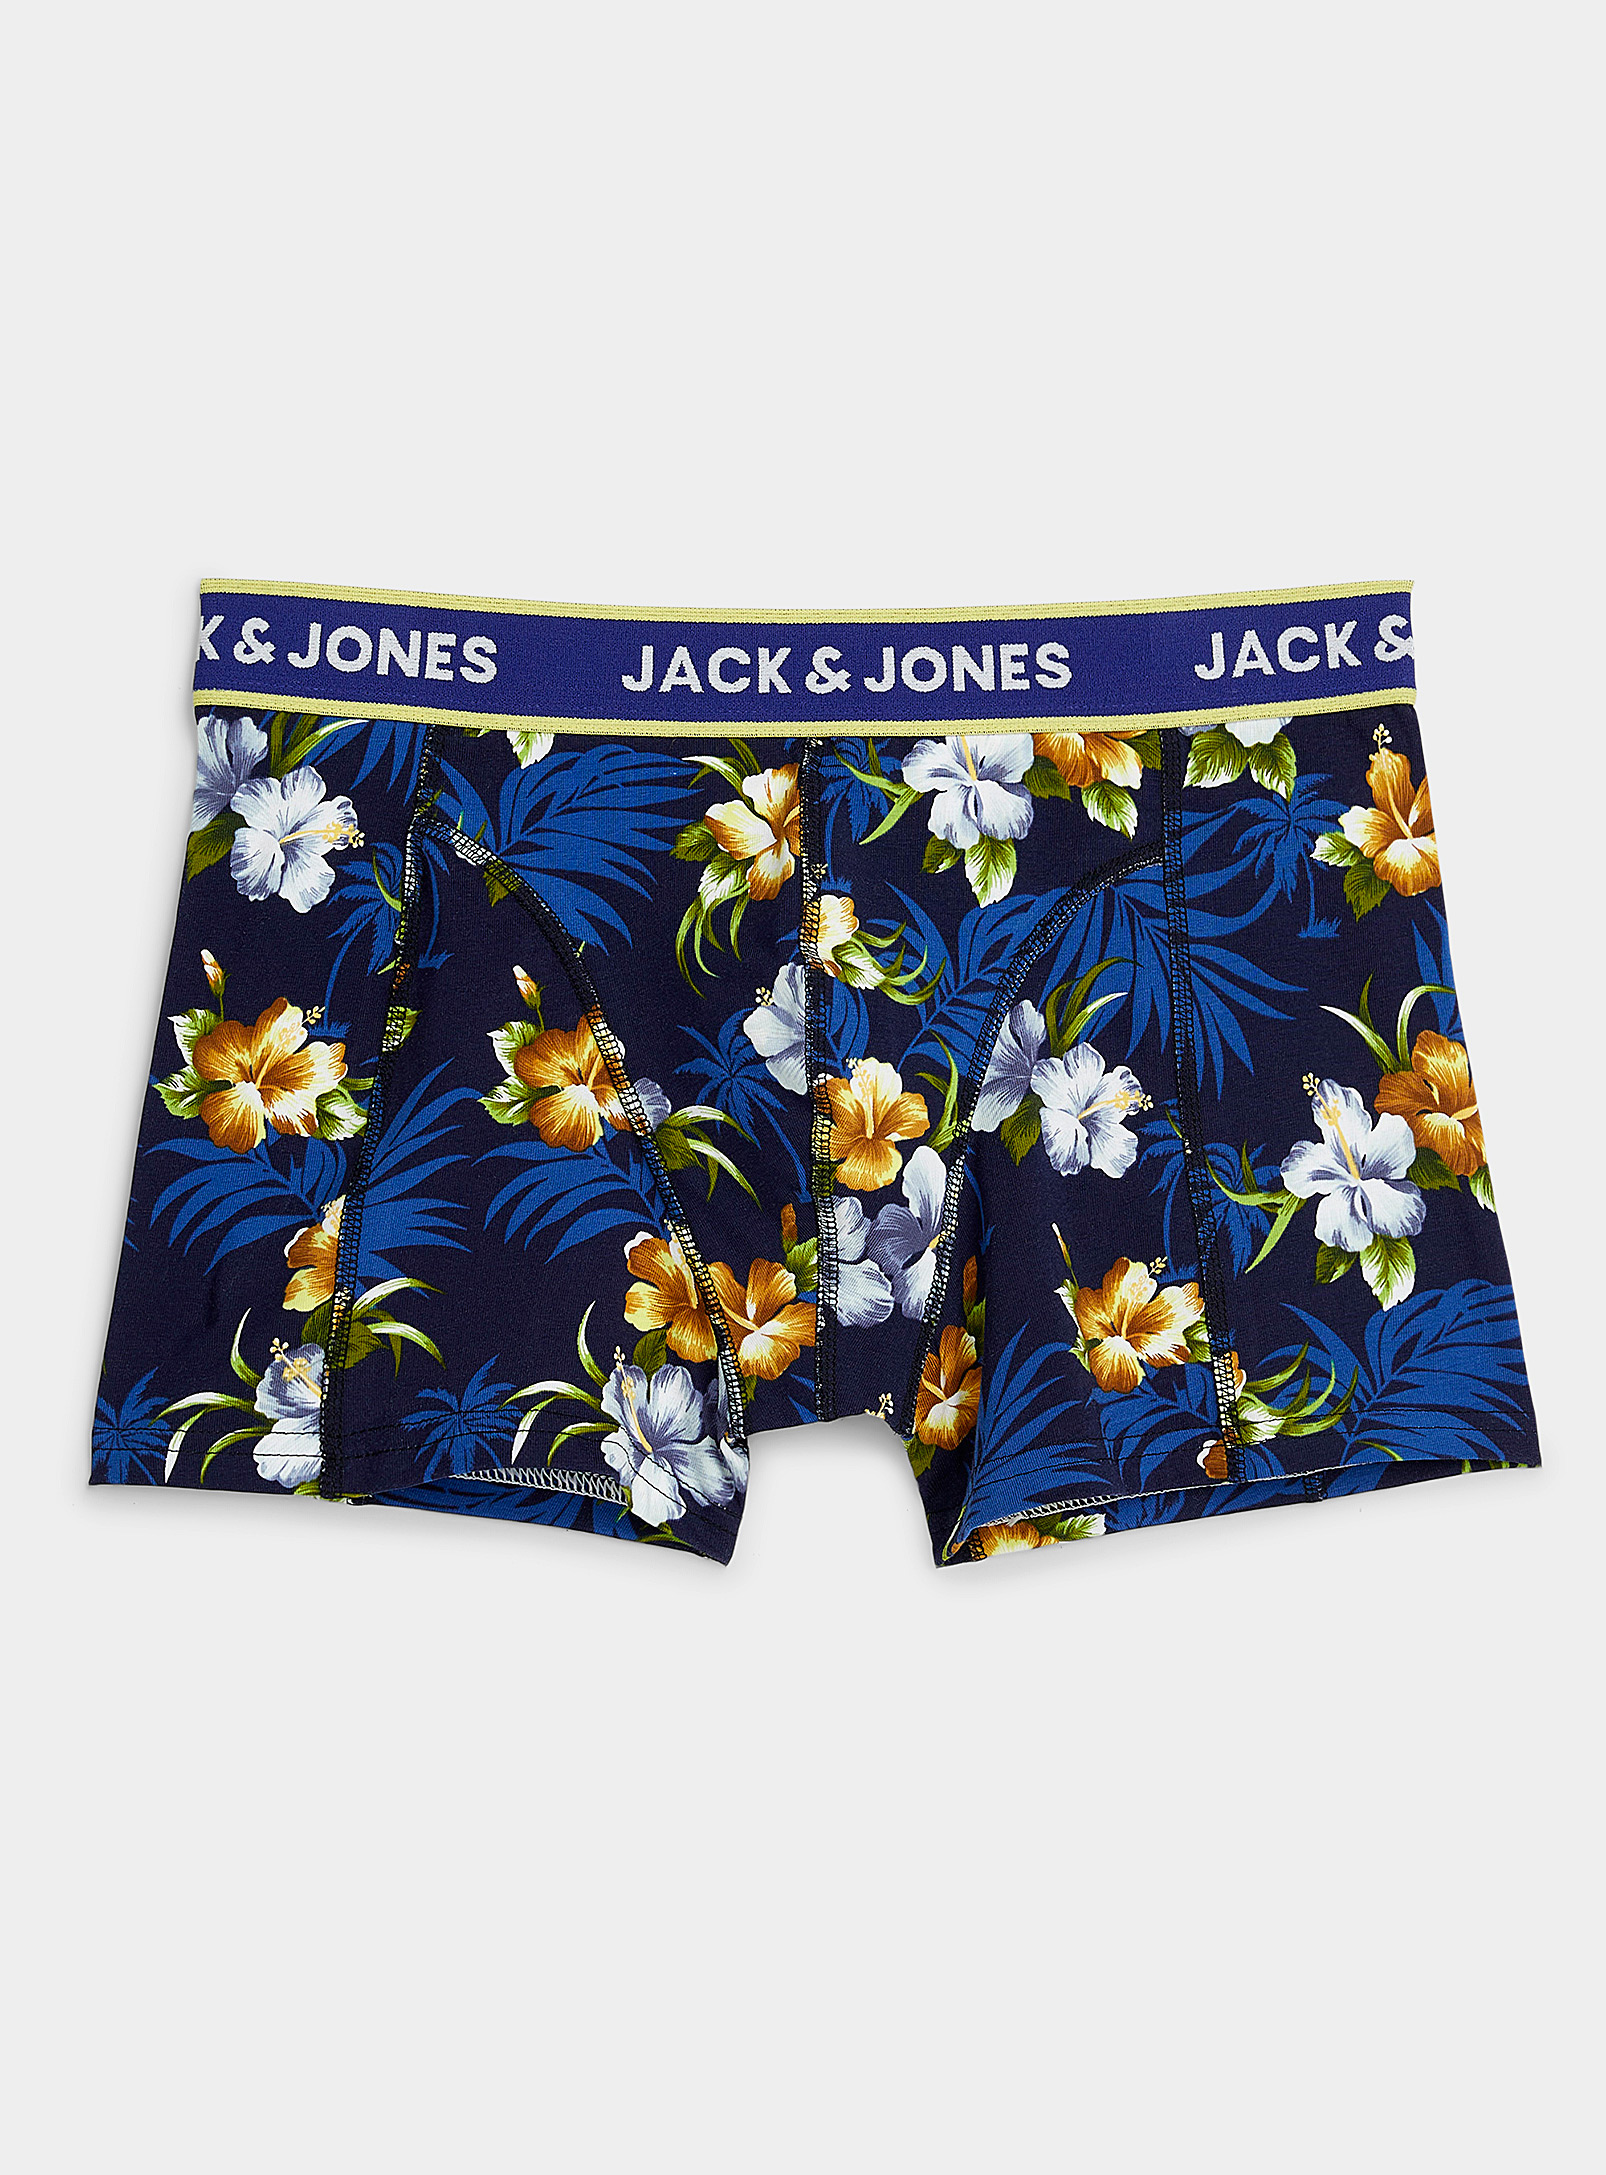 Jack & Jones Tropical Trunk In Patterned Blue